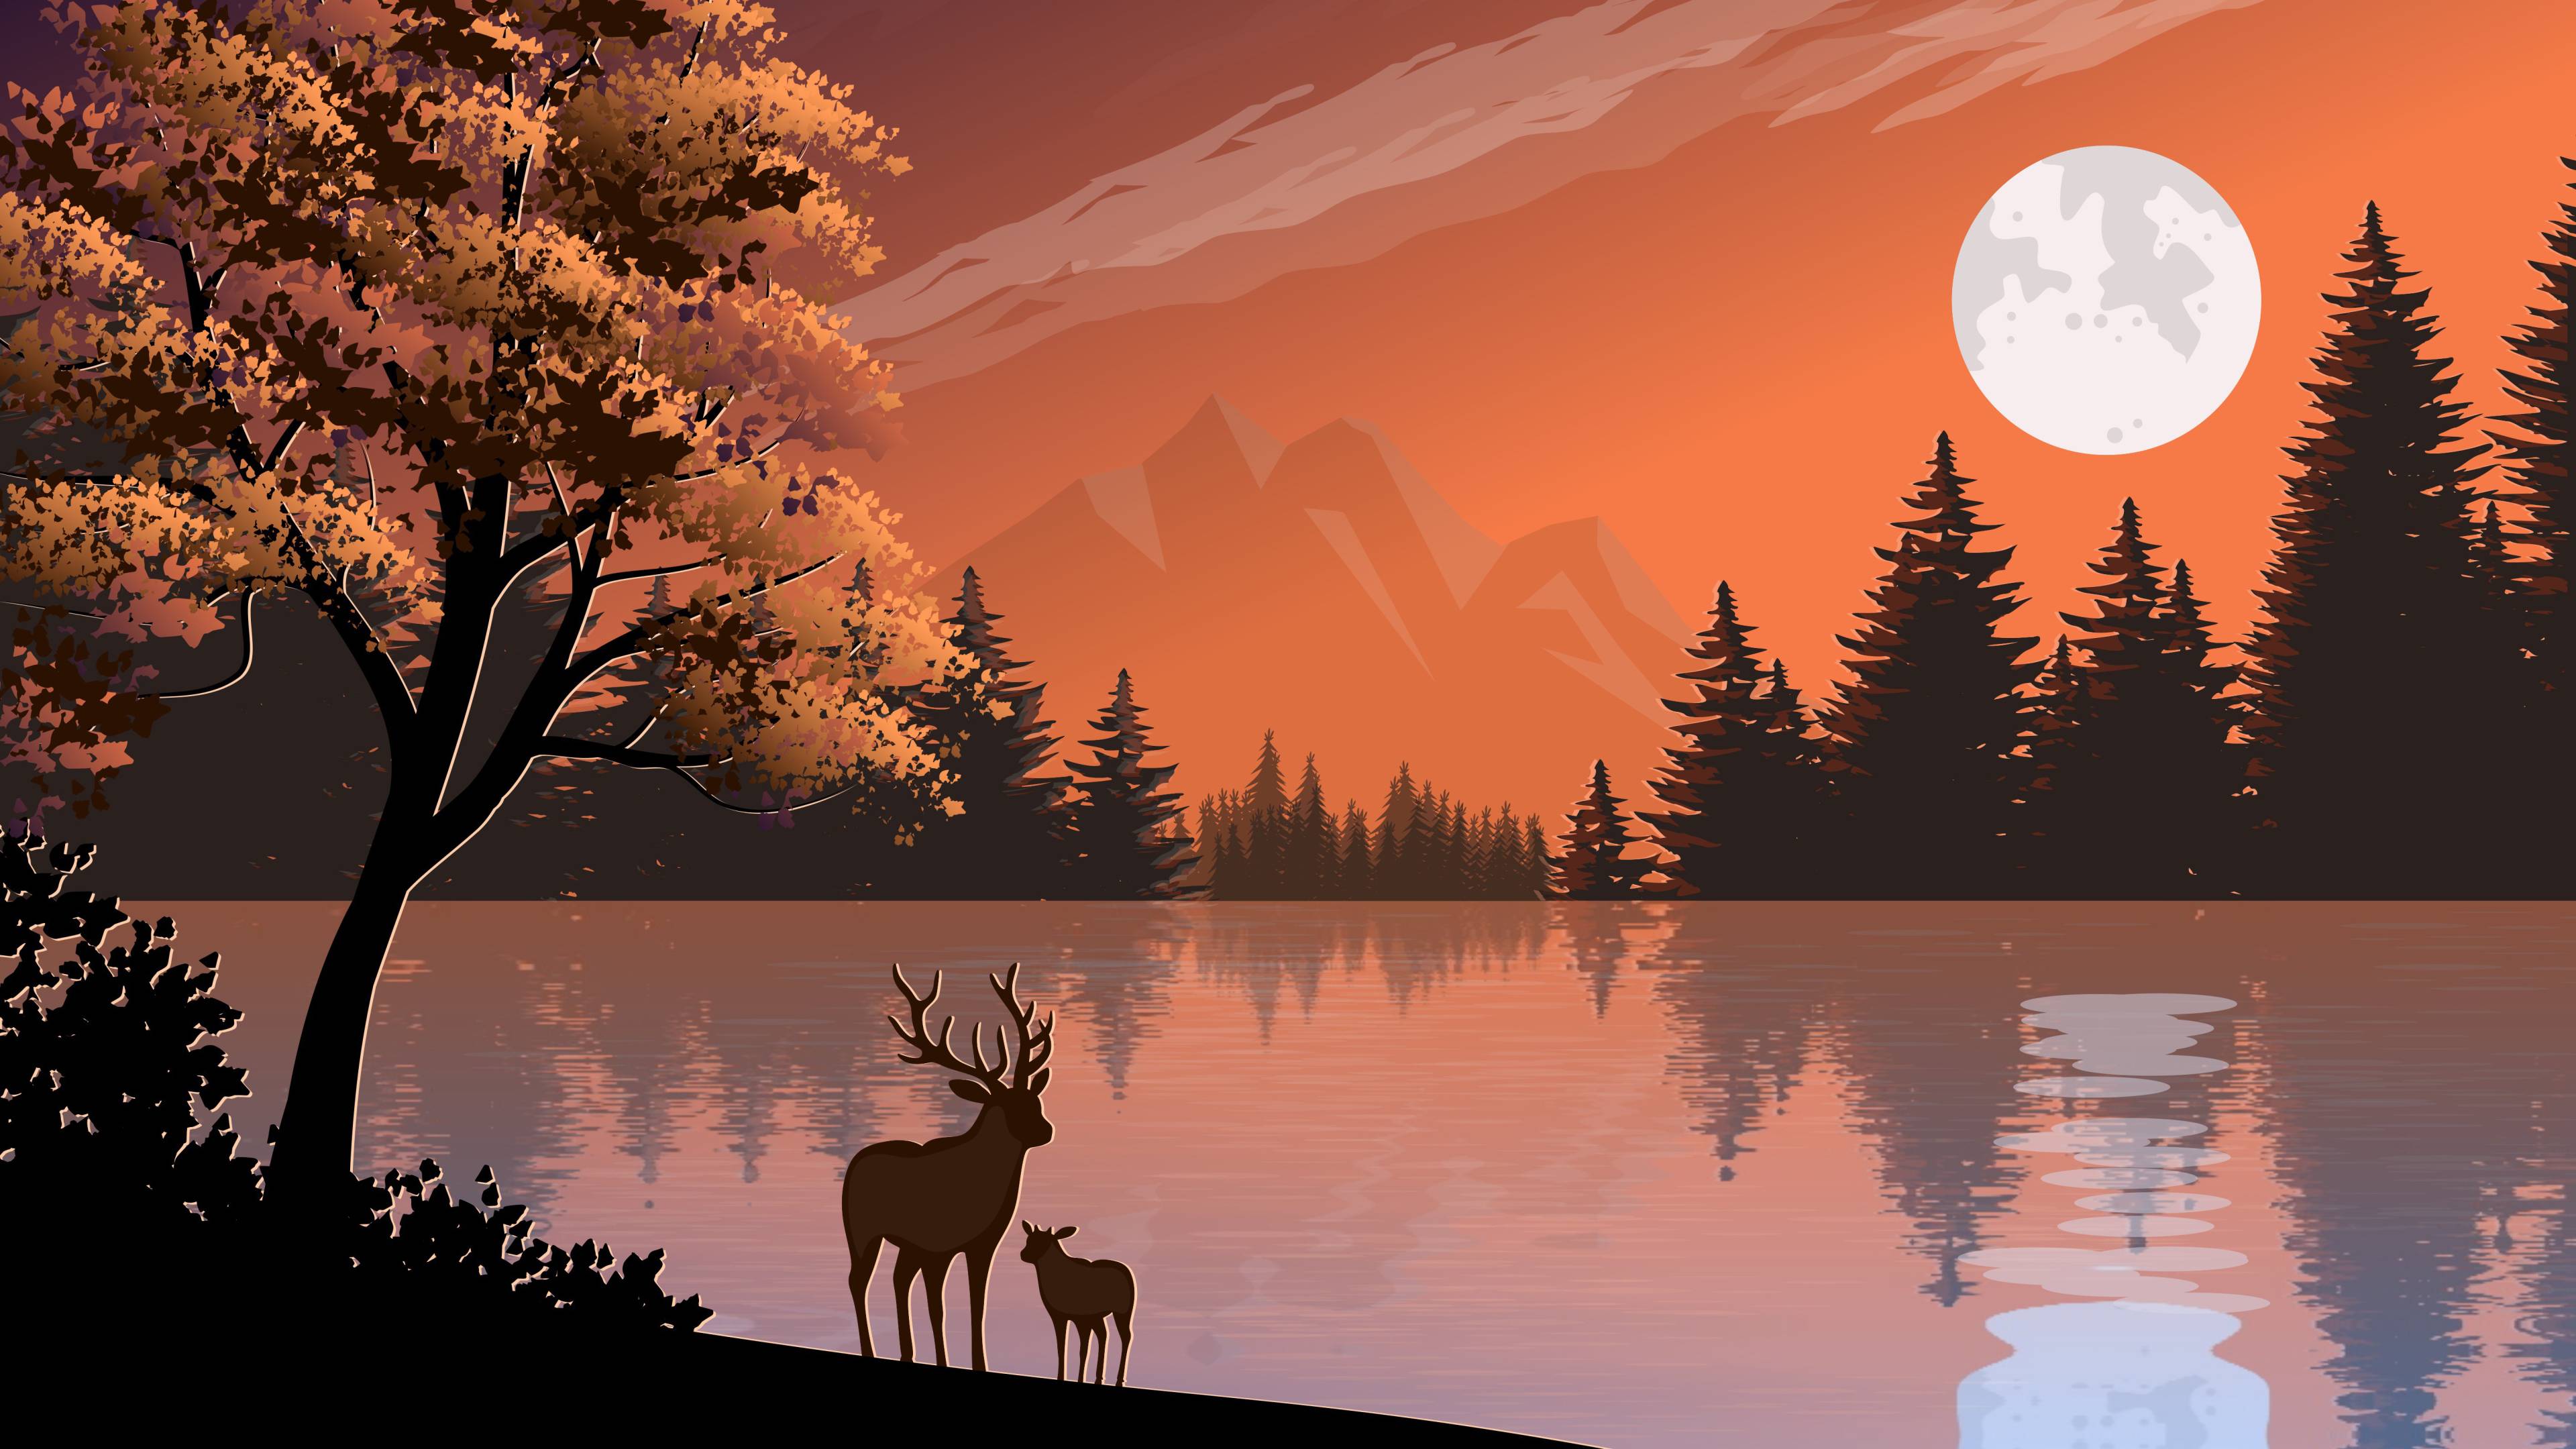 Deer 4k Forest Art 4K Wallpaper, HD Artist 4K Wallpaper, Image, Photo and Background